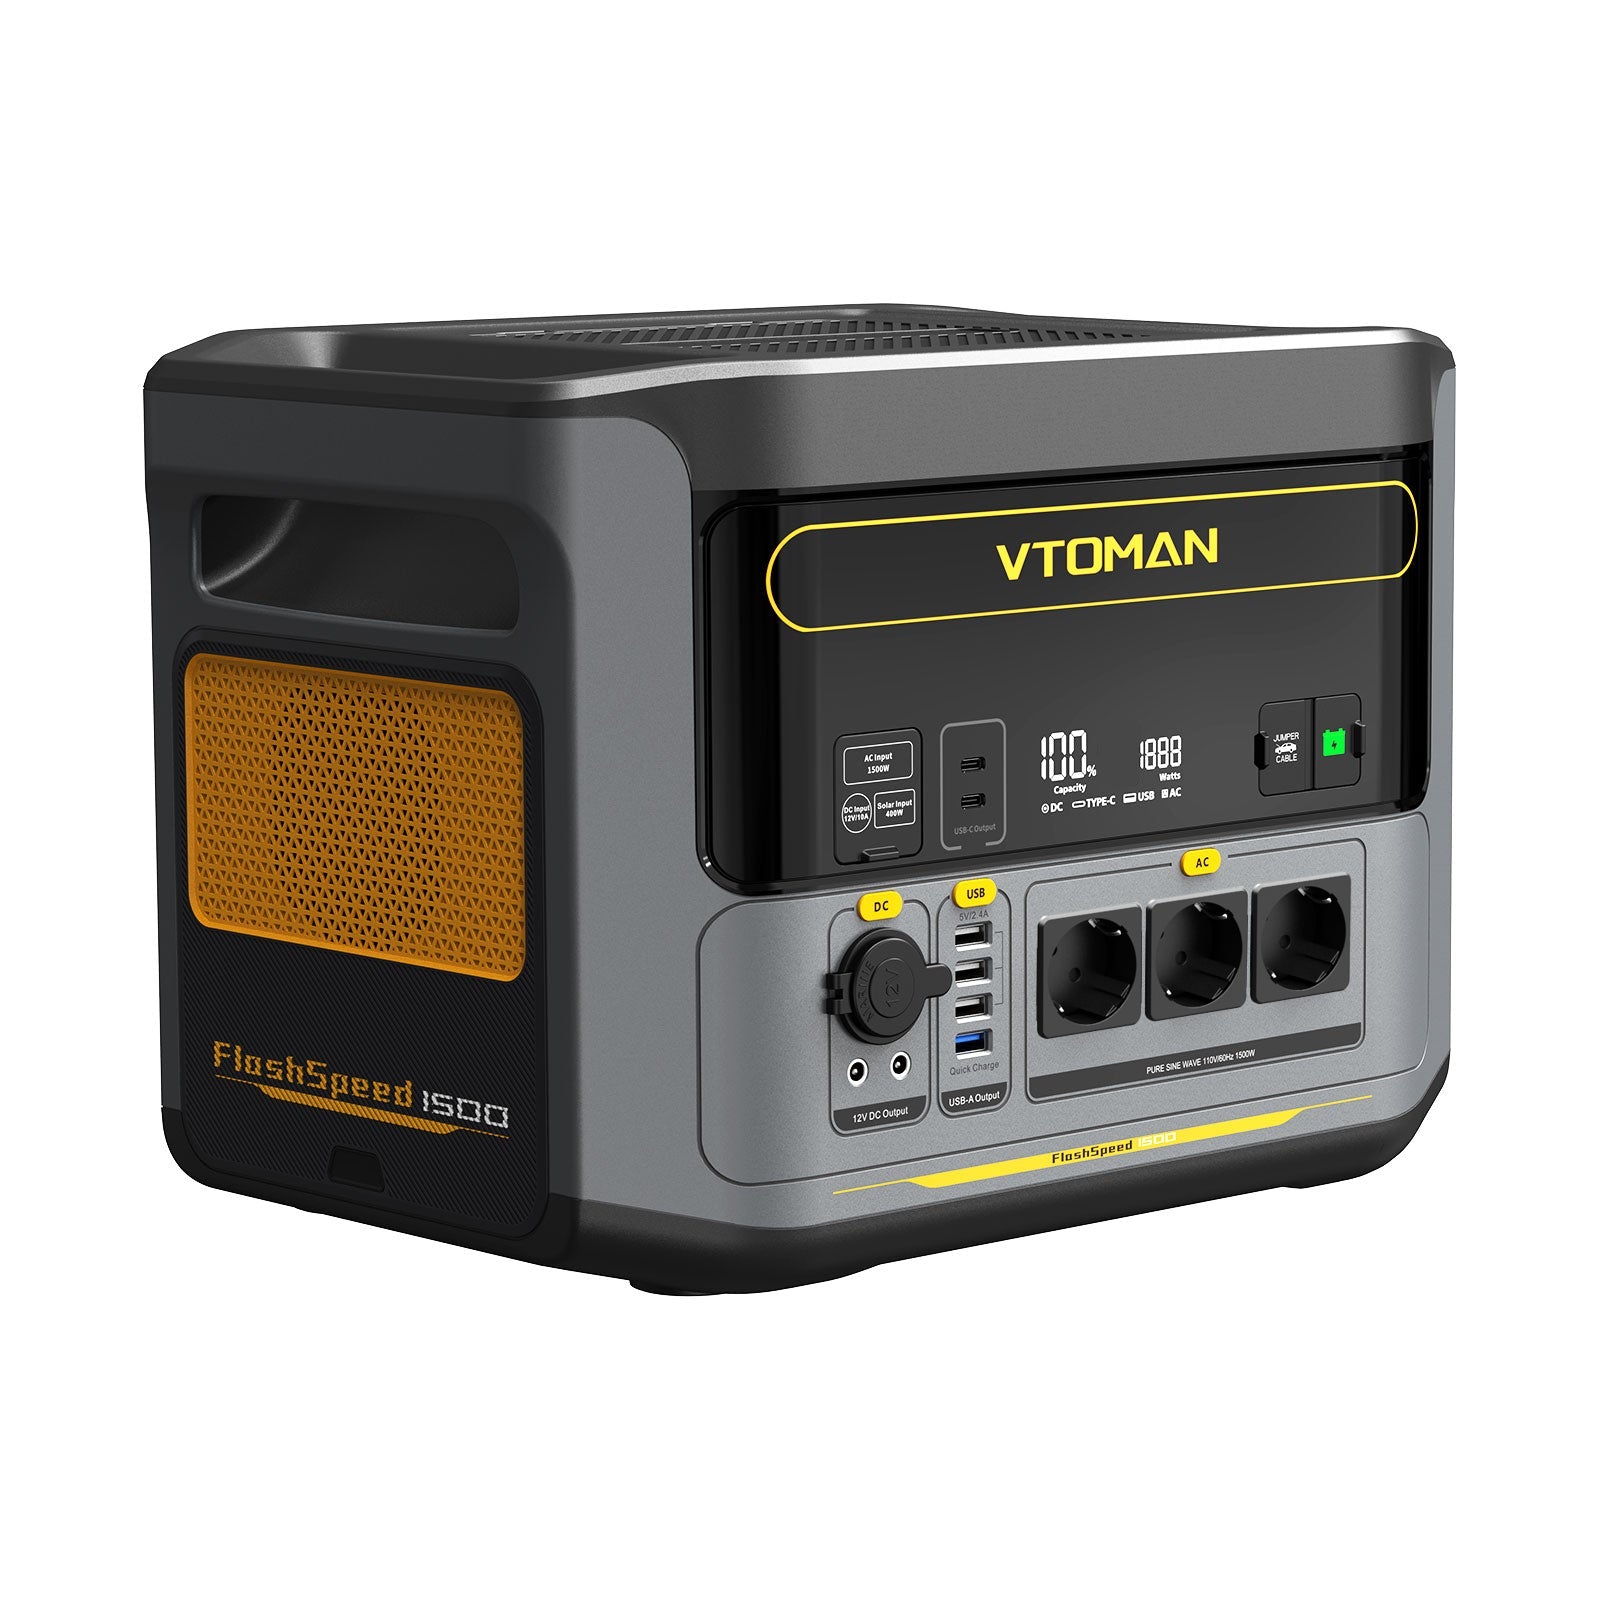 VTOMAN FlashSpeed 1500 Tragbare Powerstation